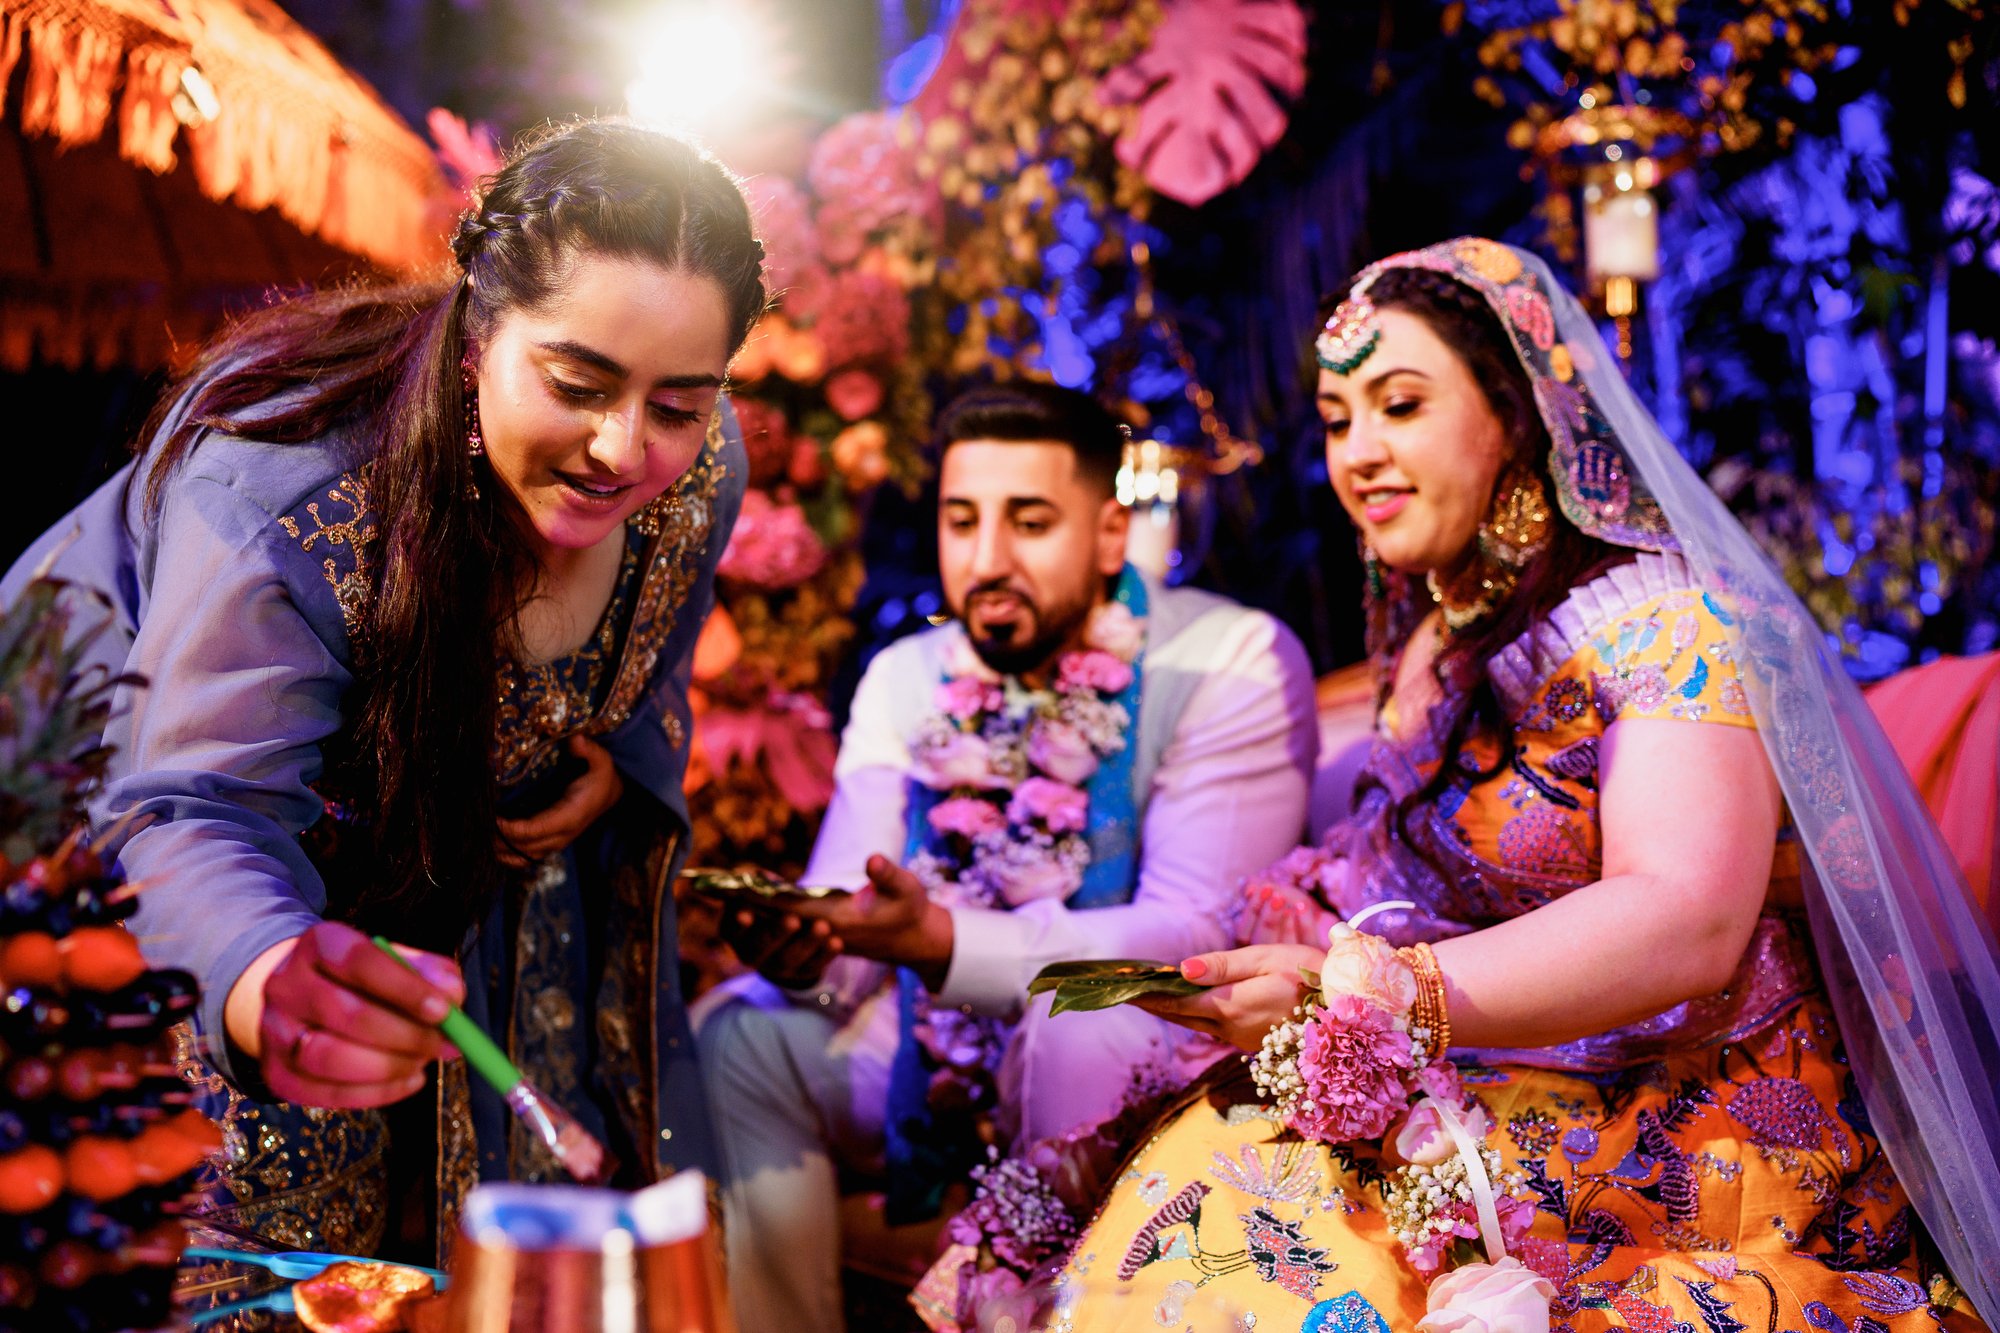 Sefton palm house wedding - indian wedding sangeet uk by arj photography®